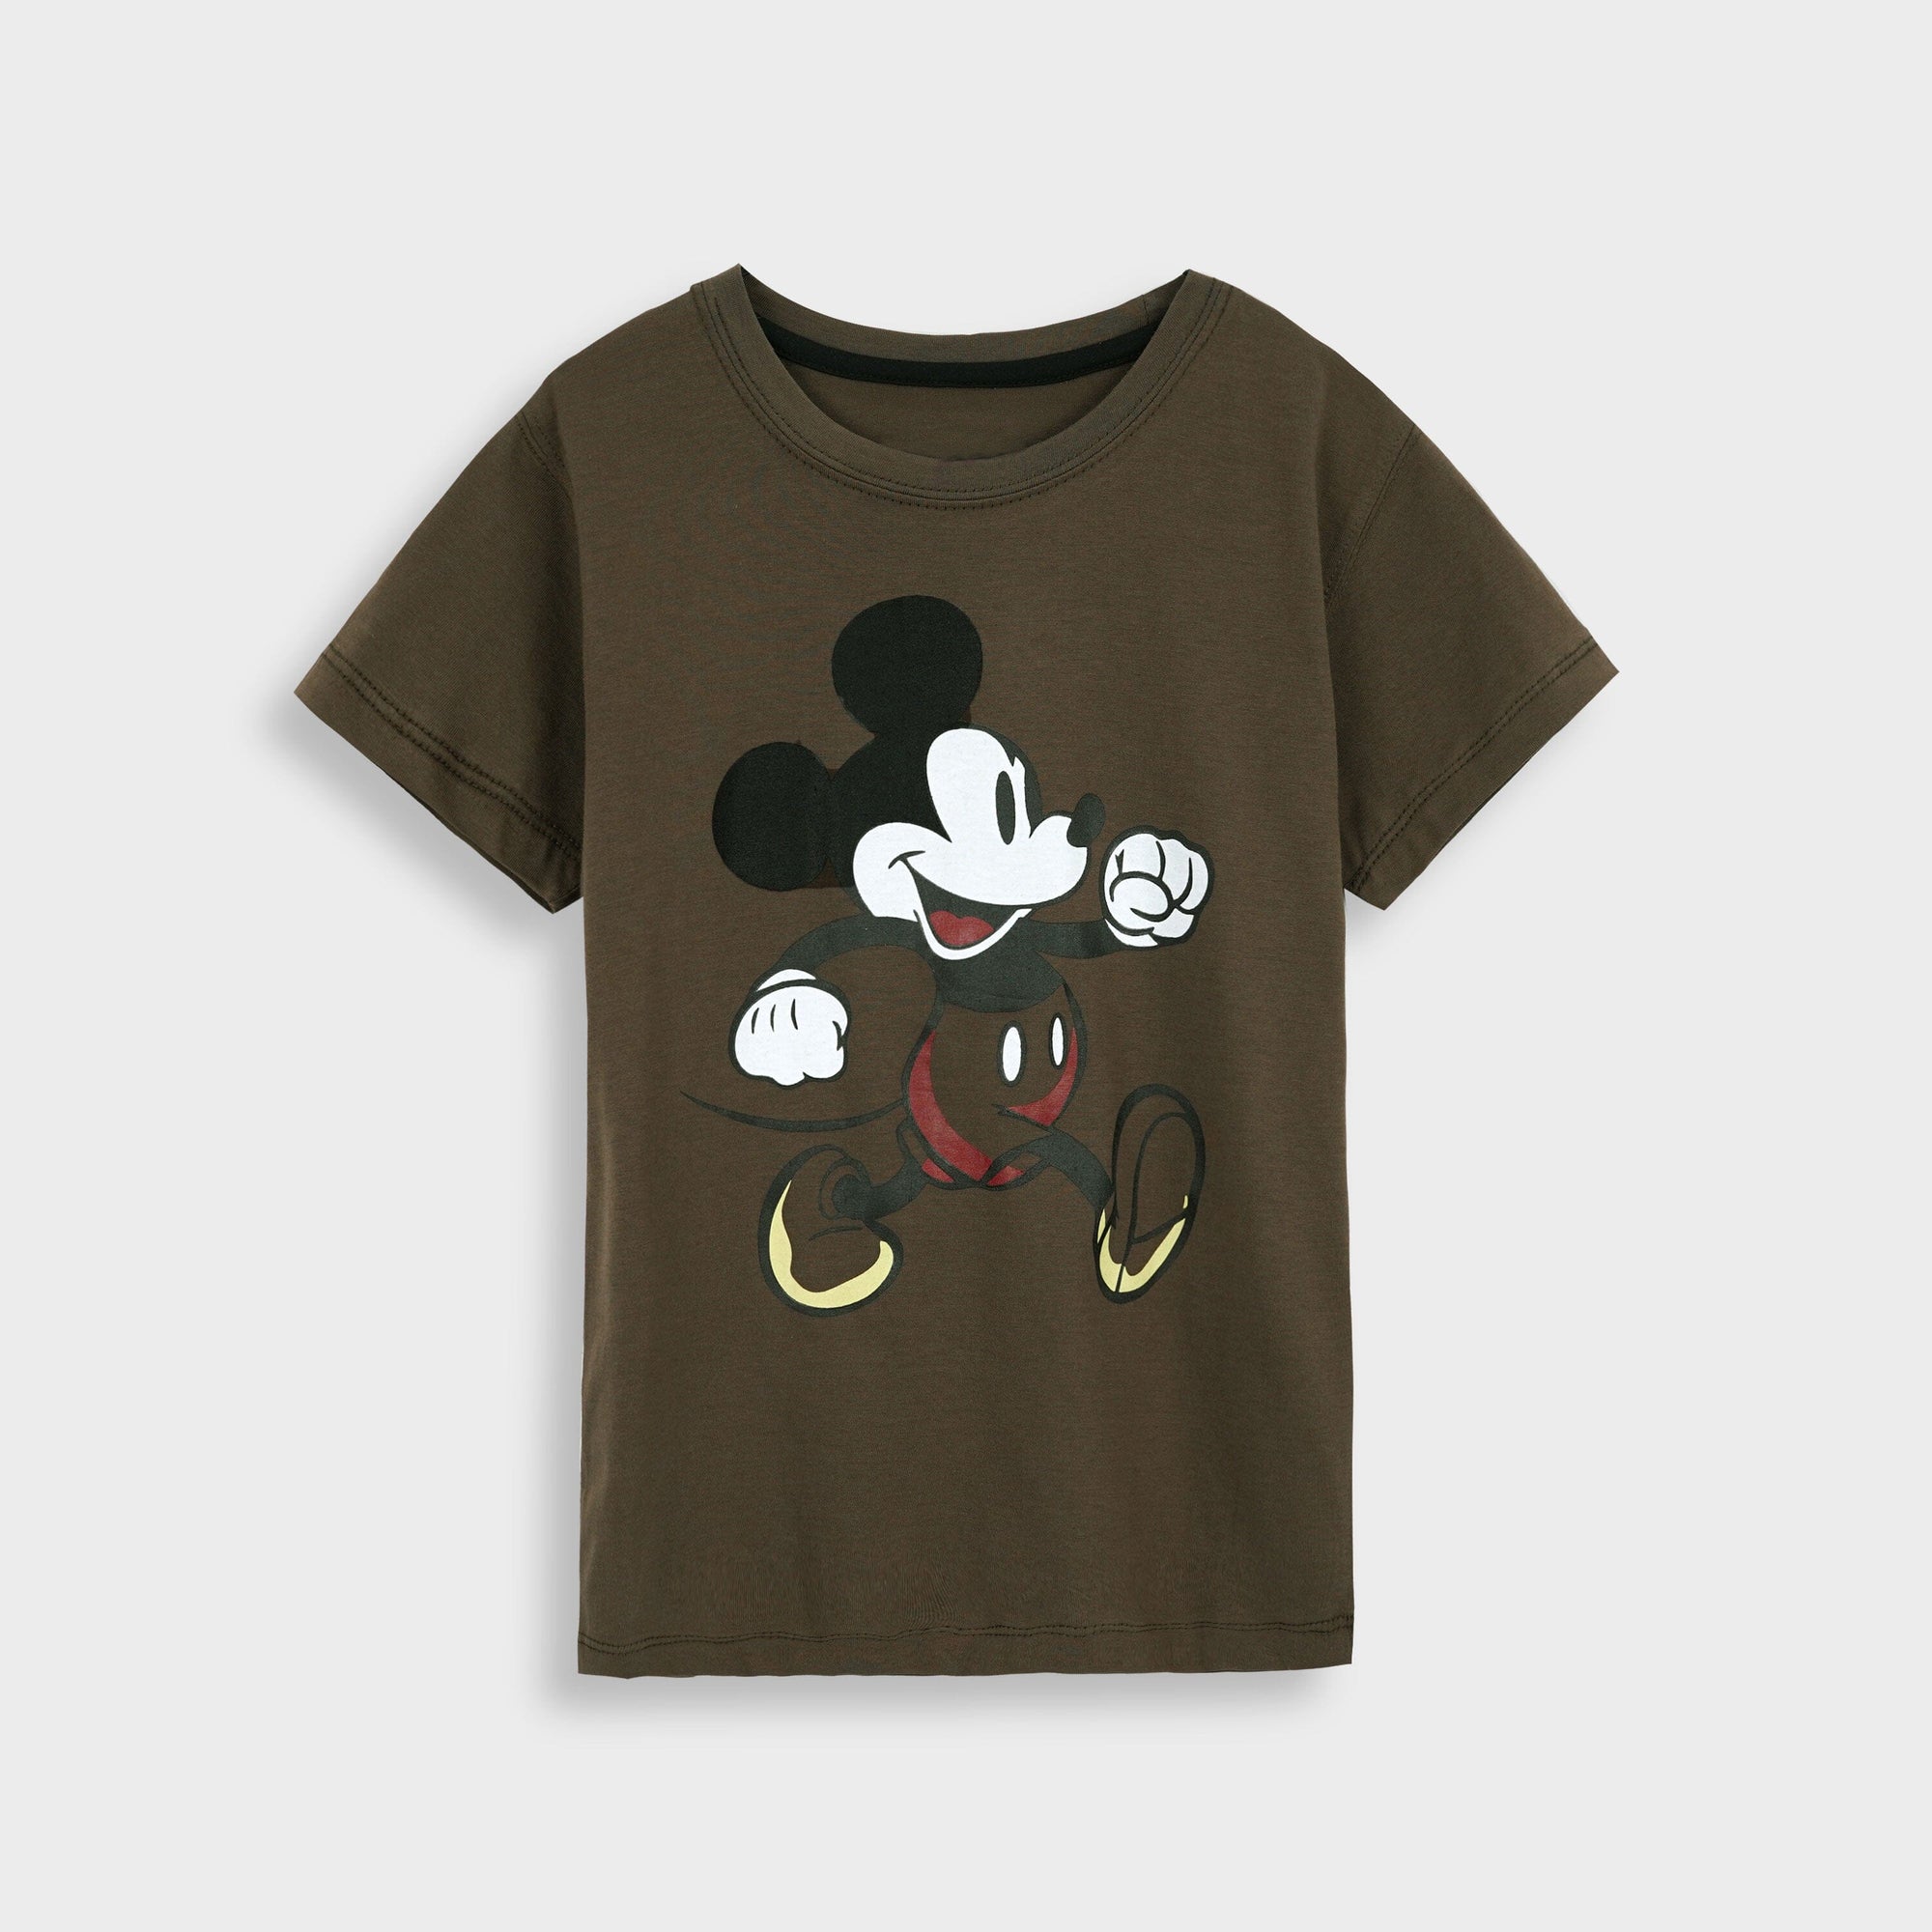 Premium Quality Brown Printed T-Shirt For Kids (122004)